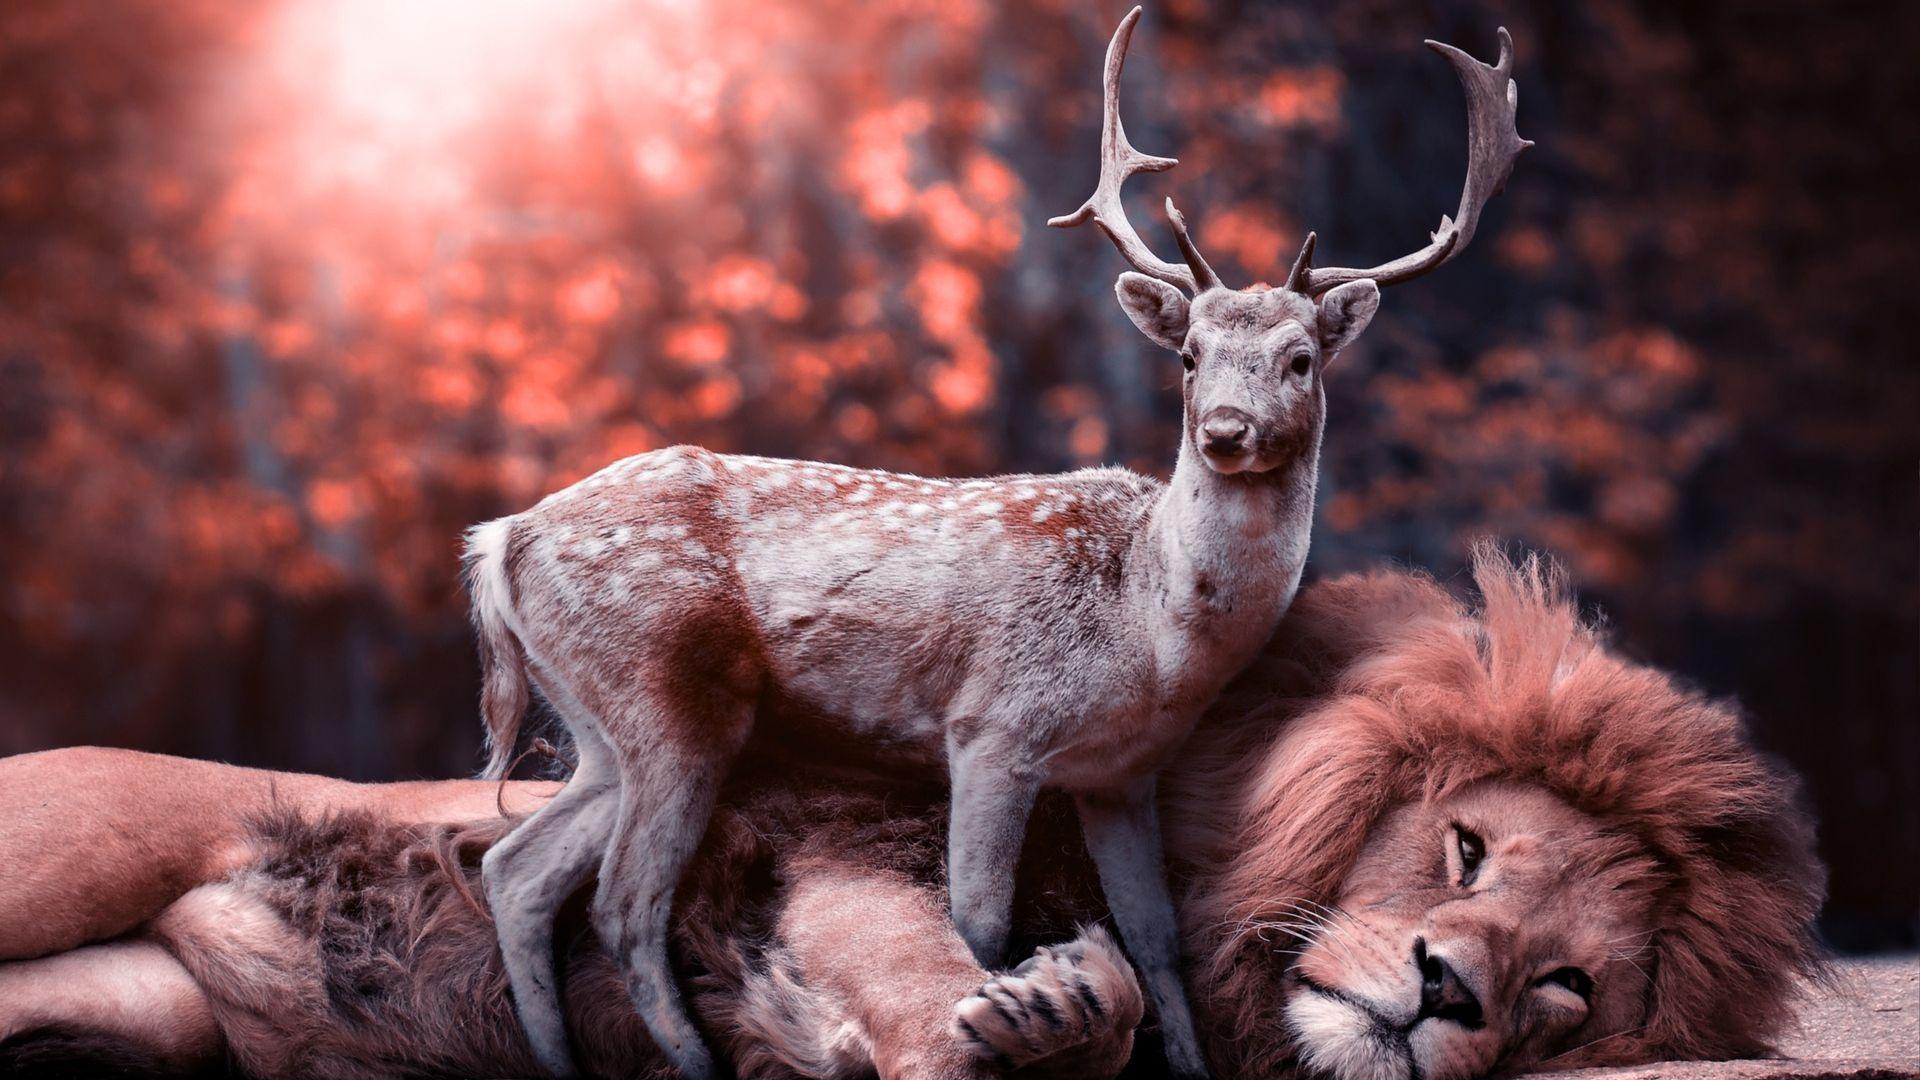 Lion and Deer Wallpaper HD